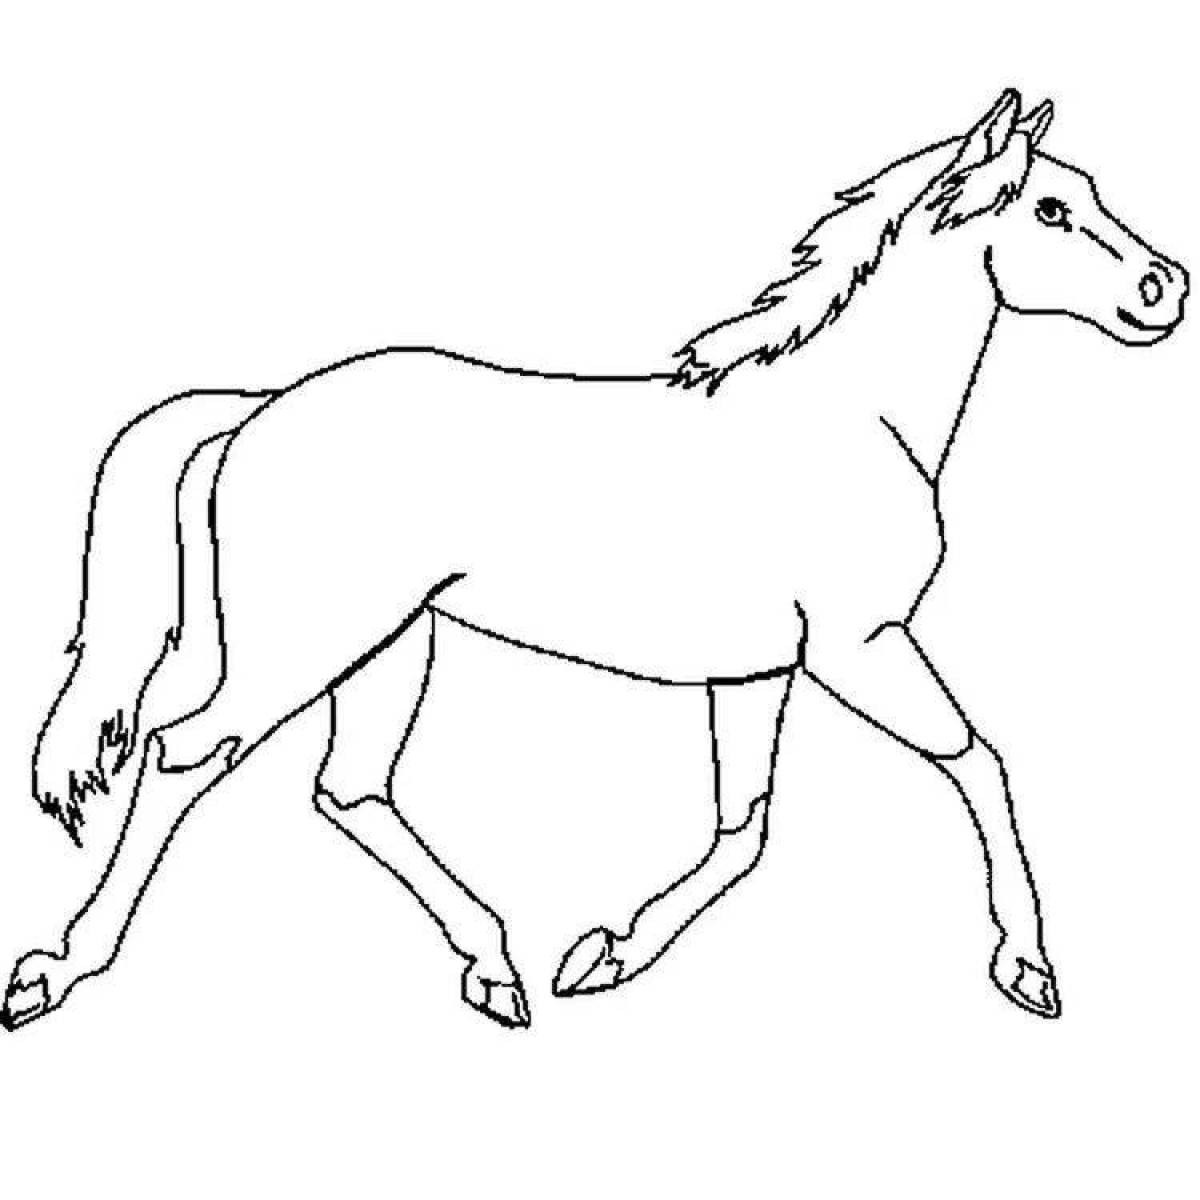 Lanky horse #3